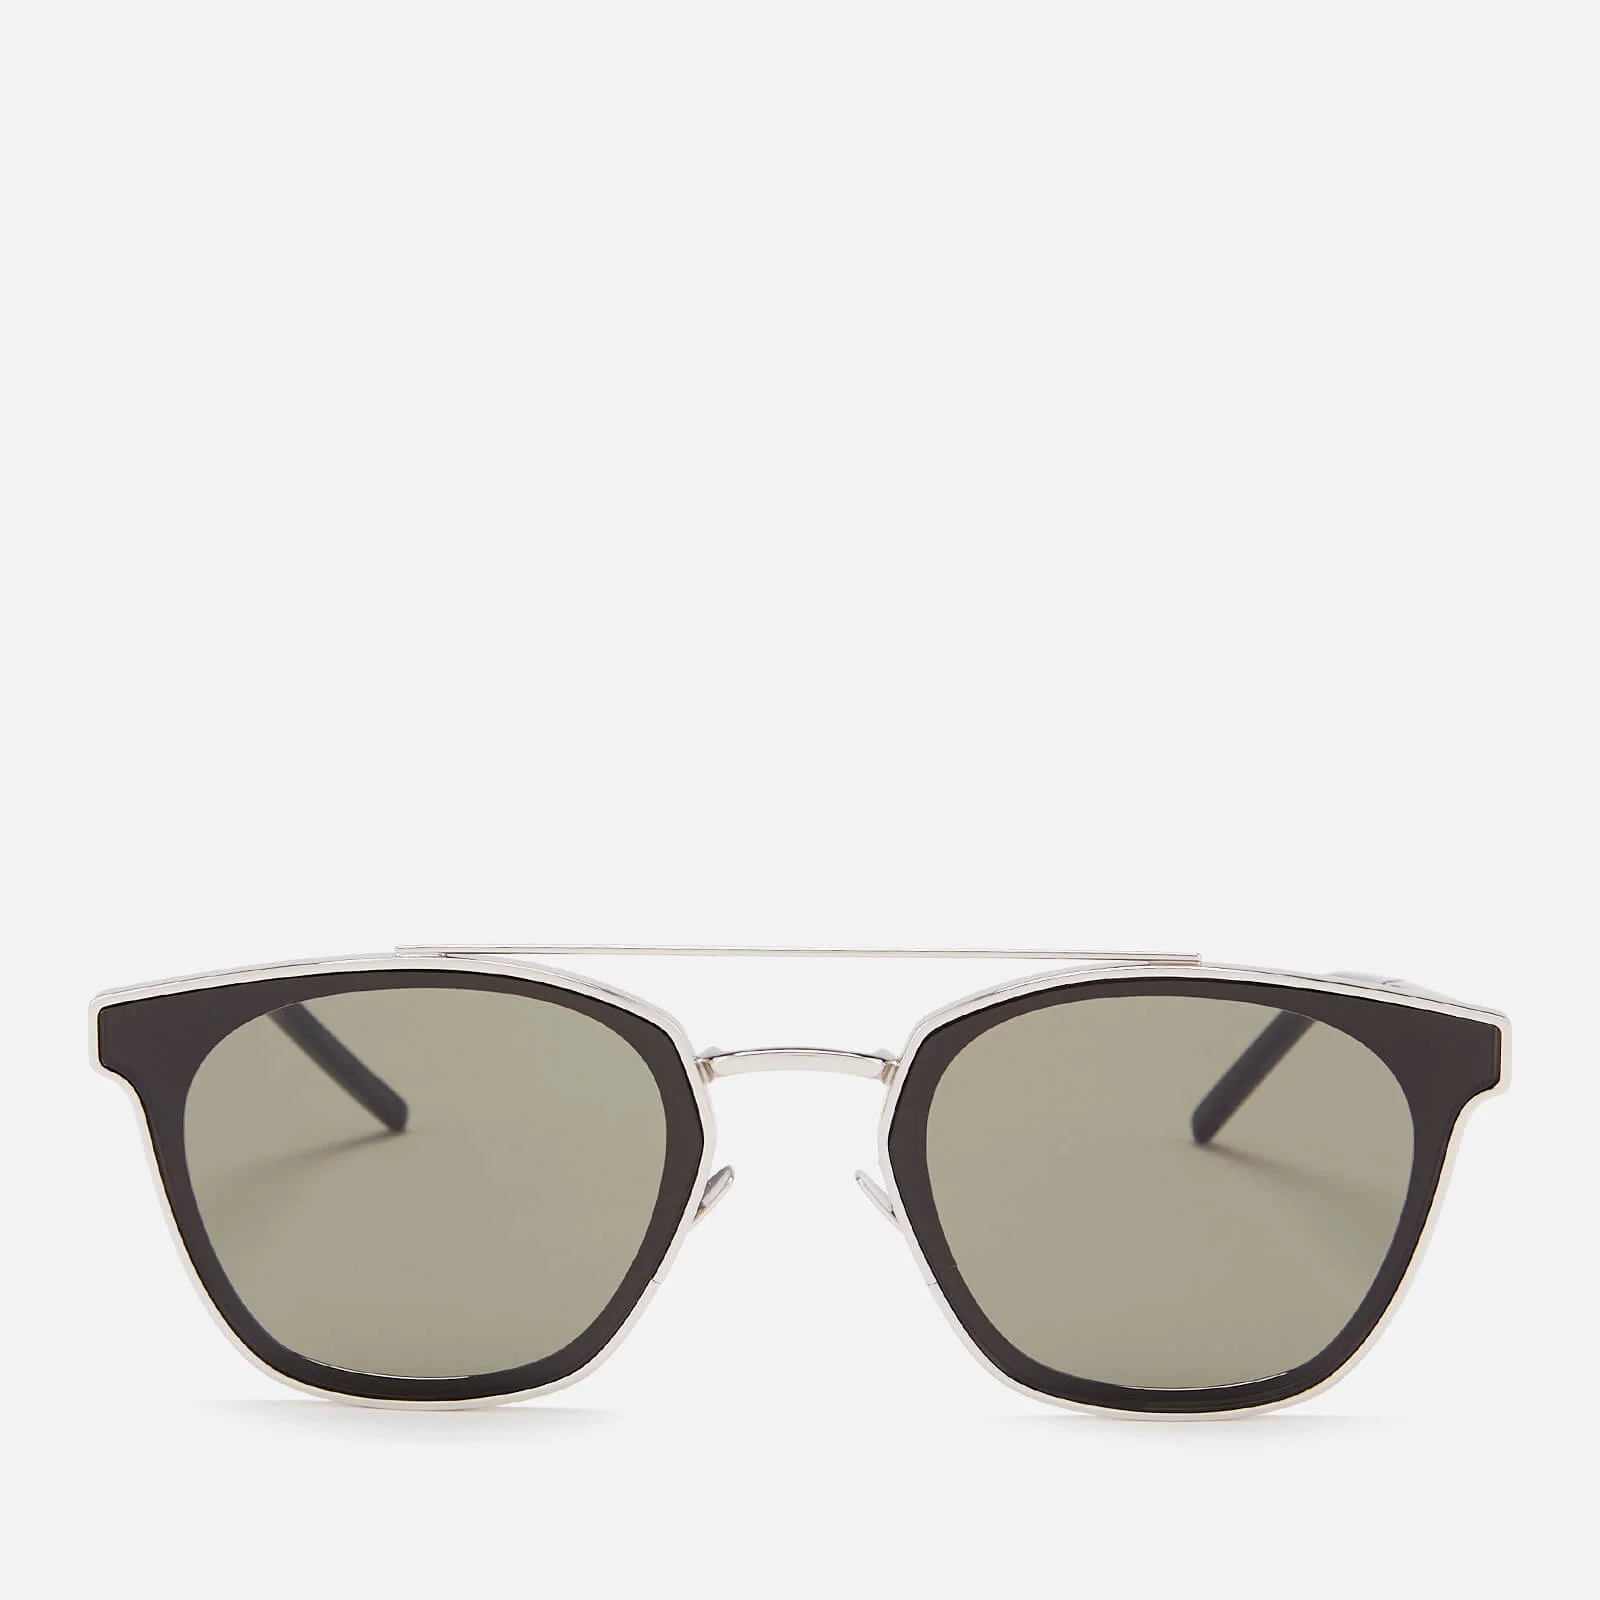 Saint Laurent Aviator Style Sunglasses - Silver Image 1